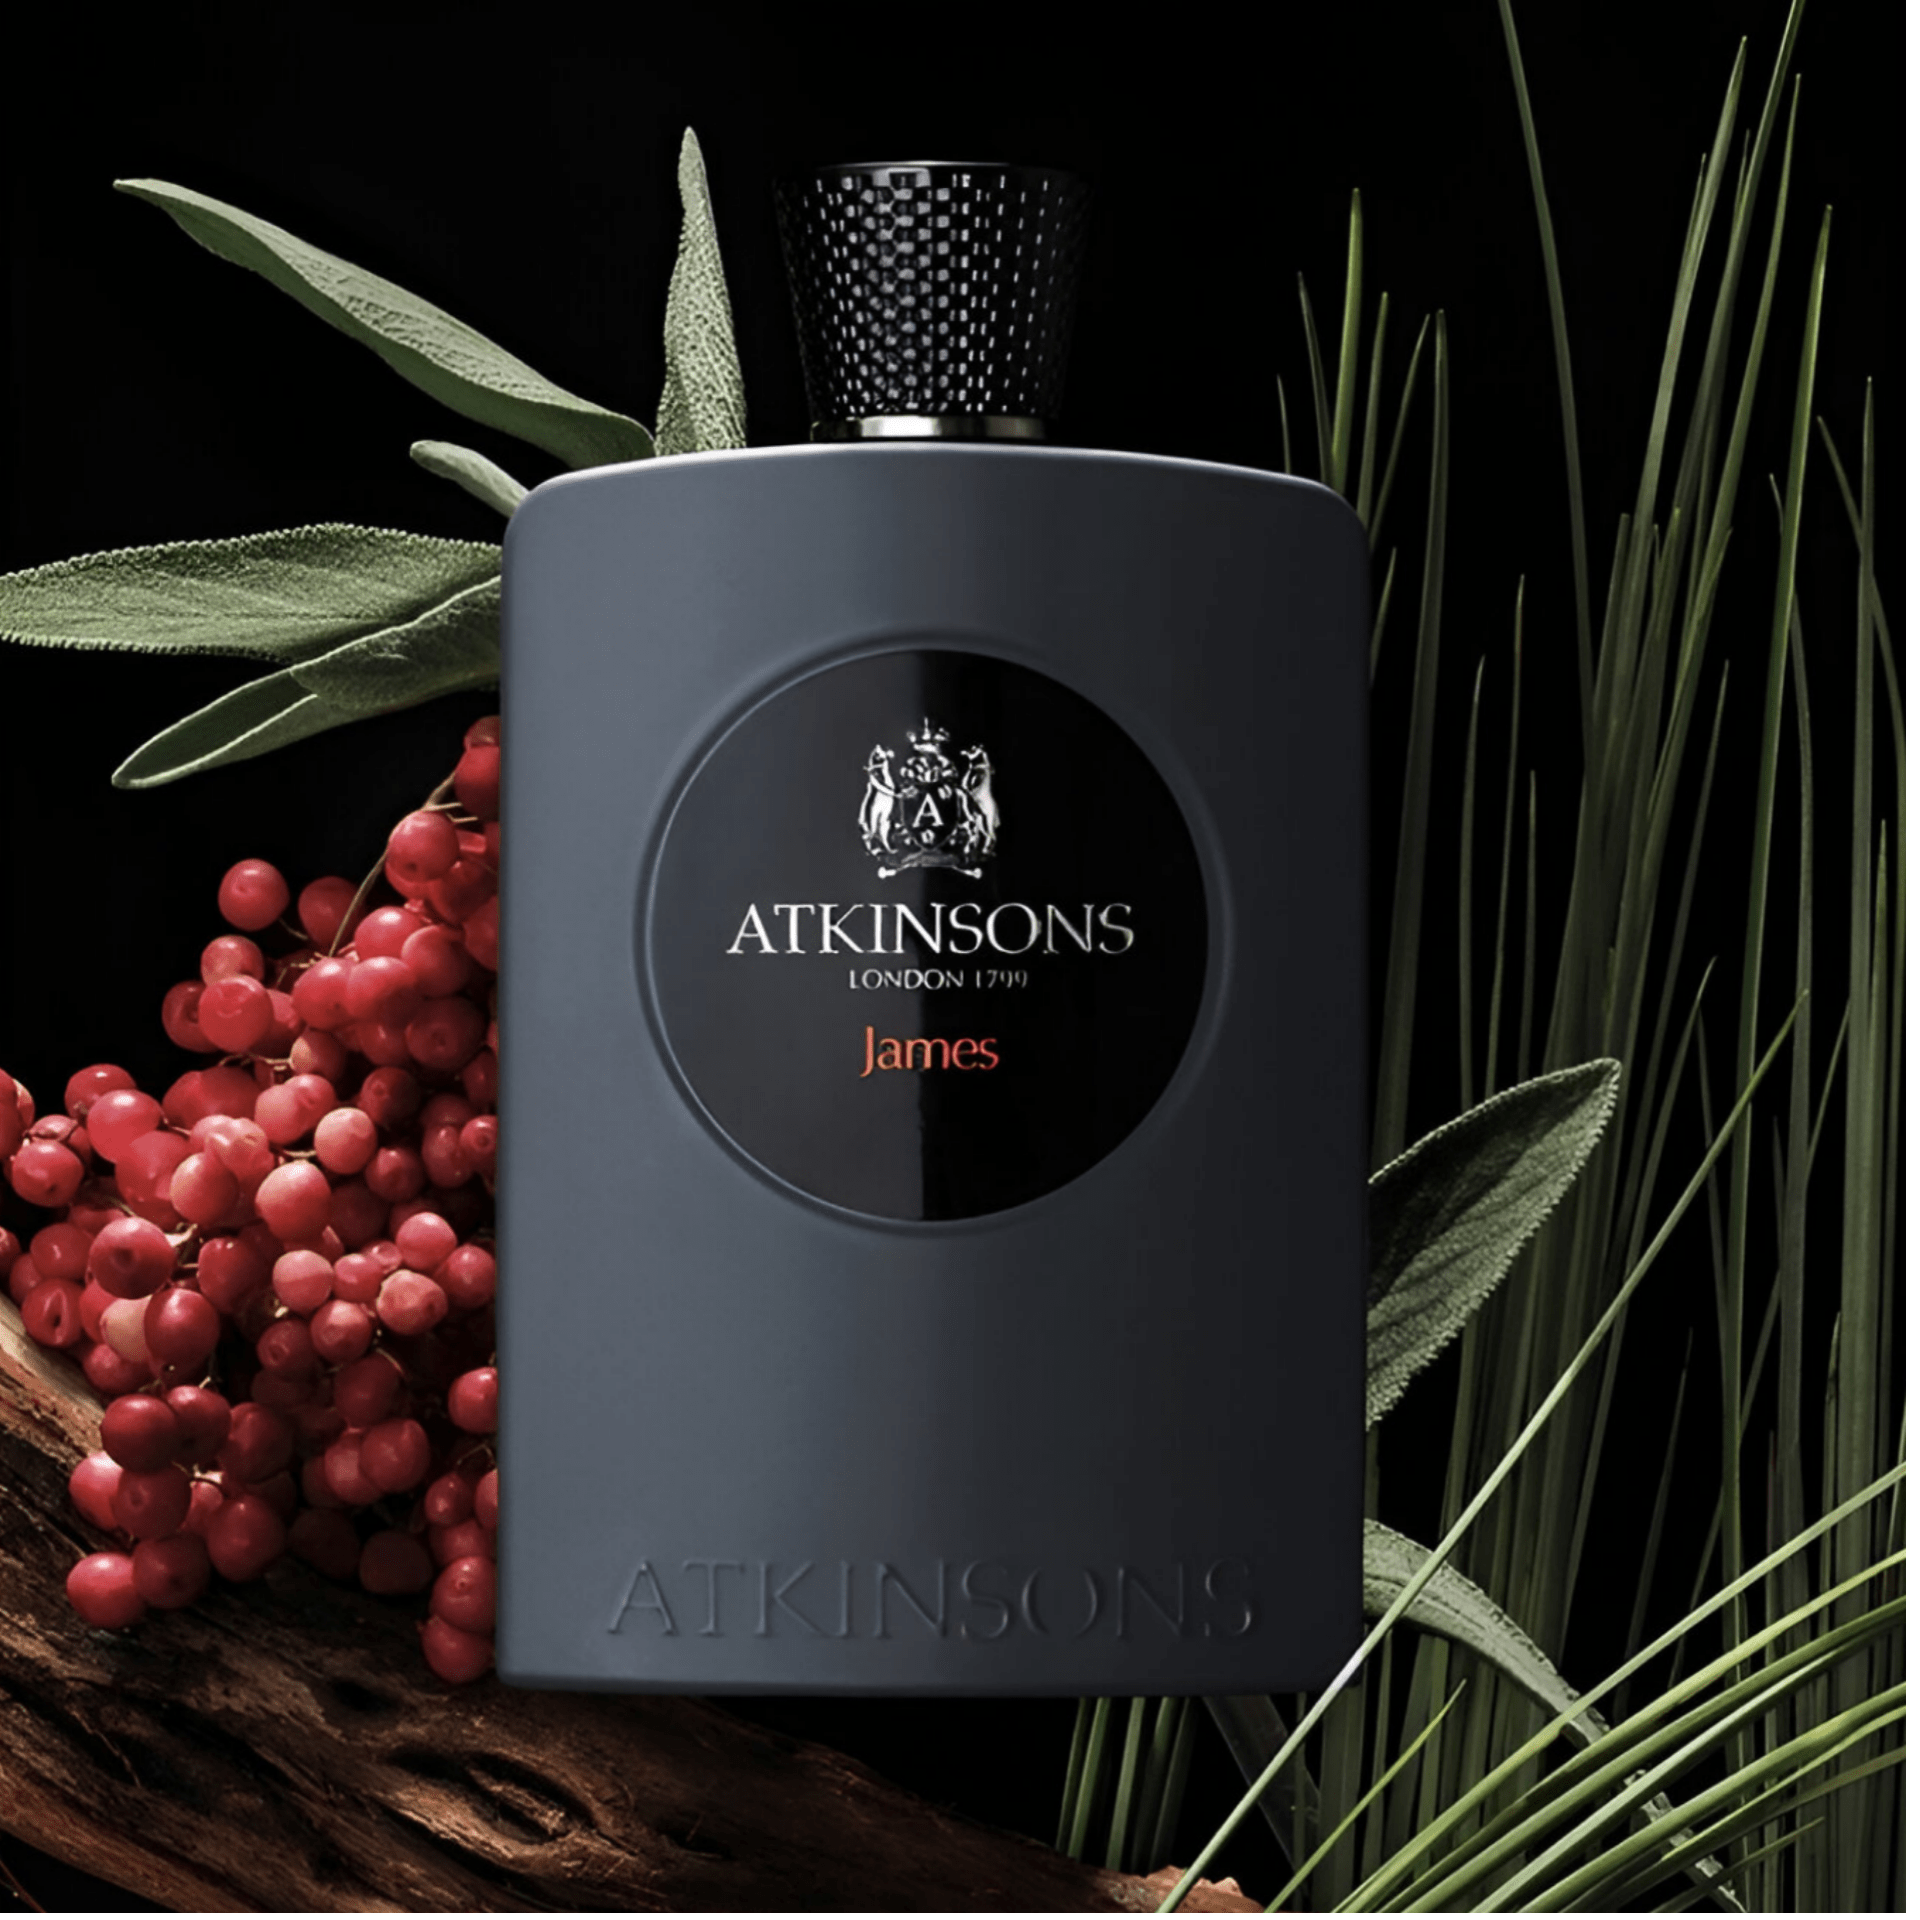 Atkinsons James EDP | My Perfume Shop Australia